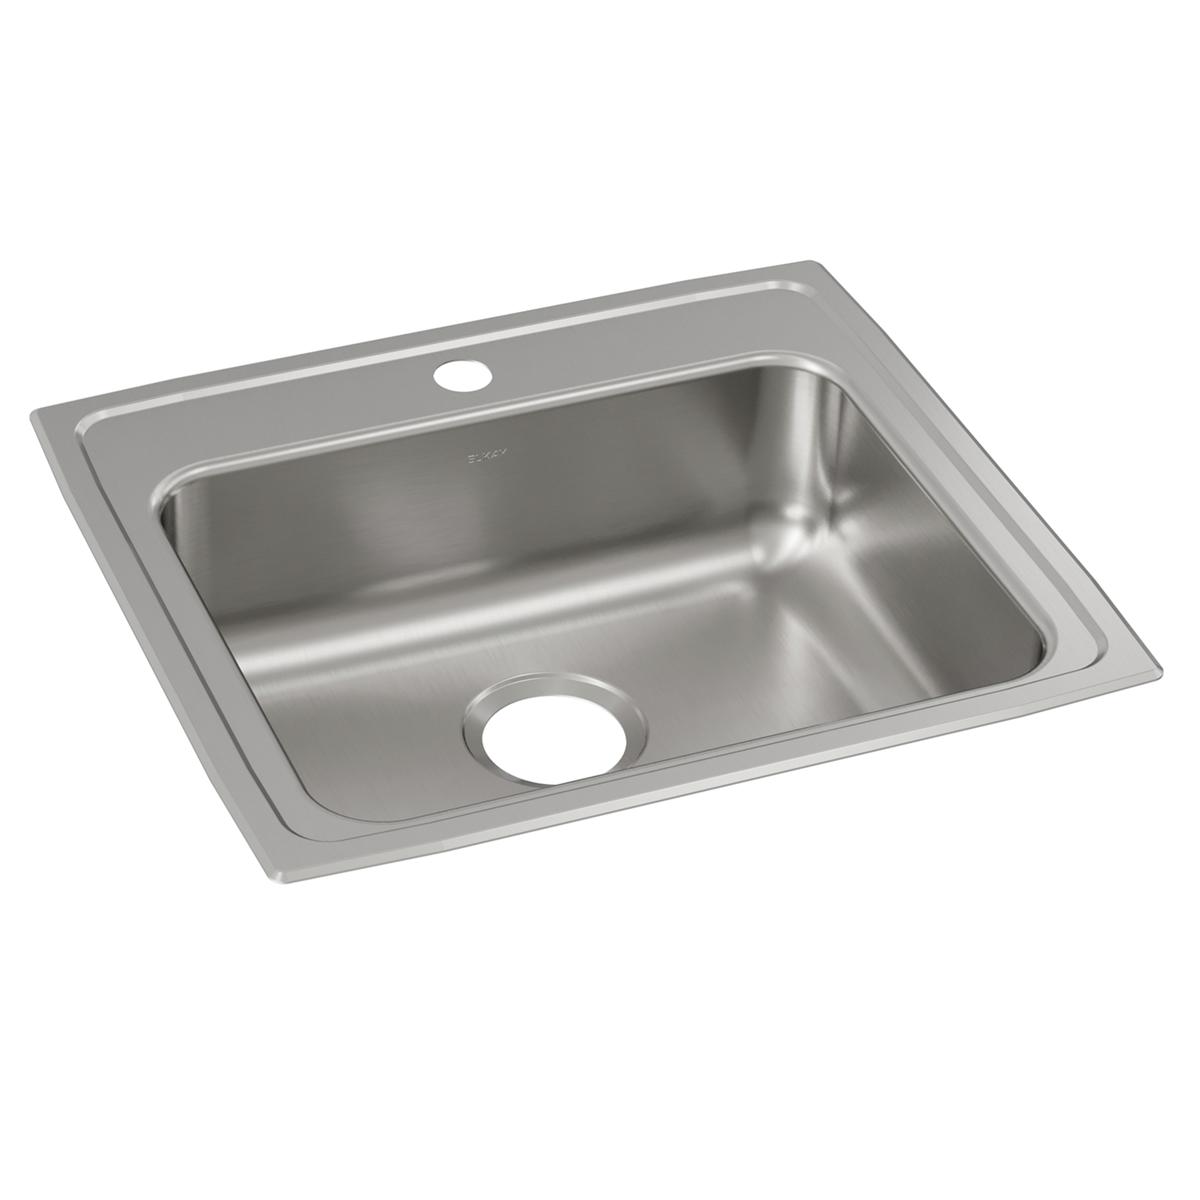 Elkay Lustertone Classic 22" x 19-1/2" x 6-1/2" Single Bowl Drop-in ADA Sink